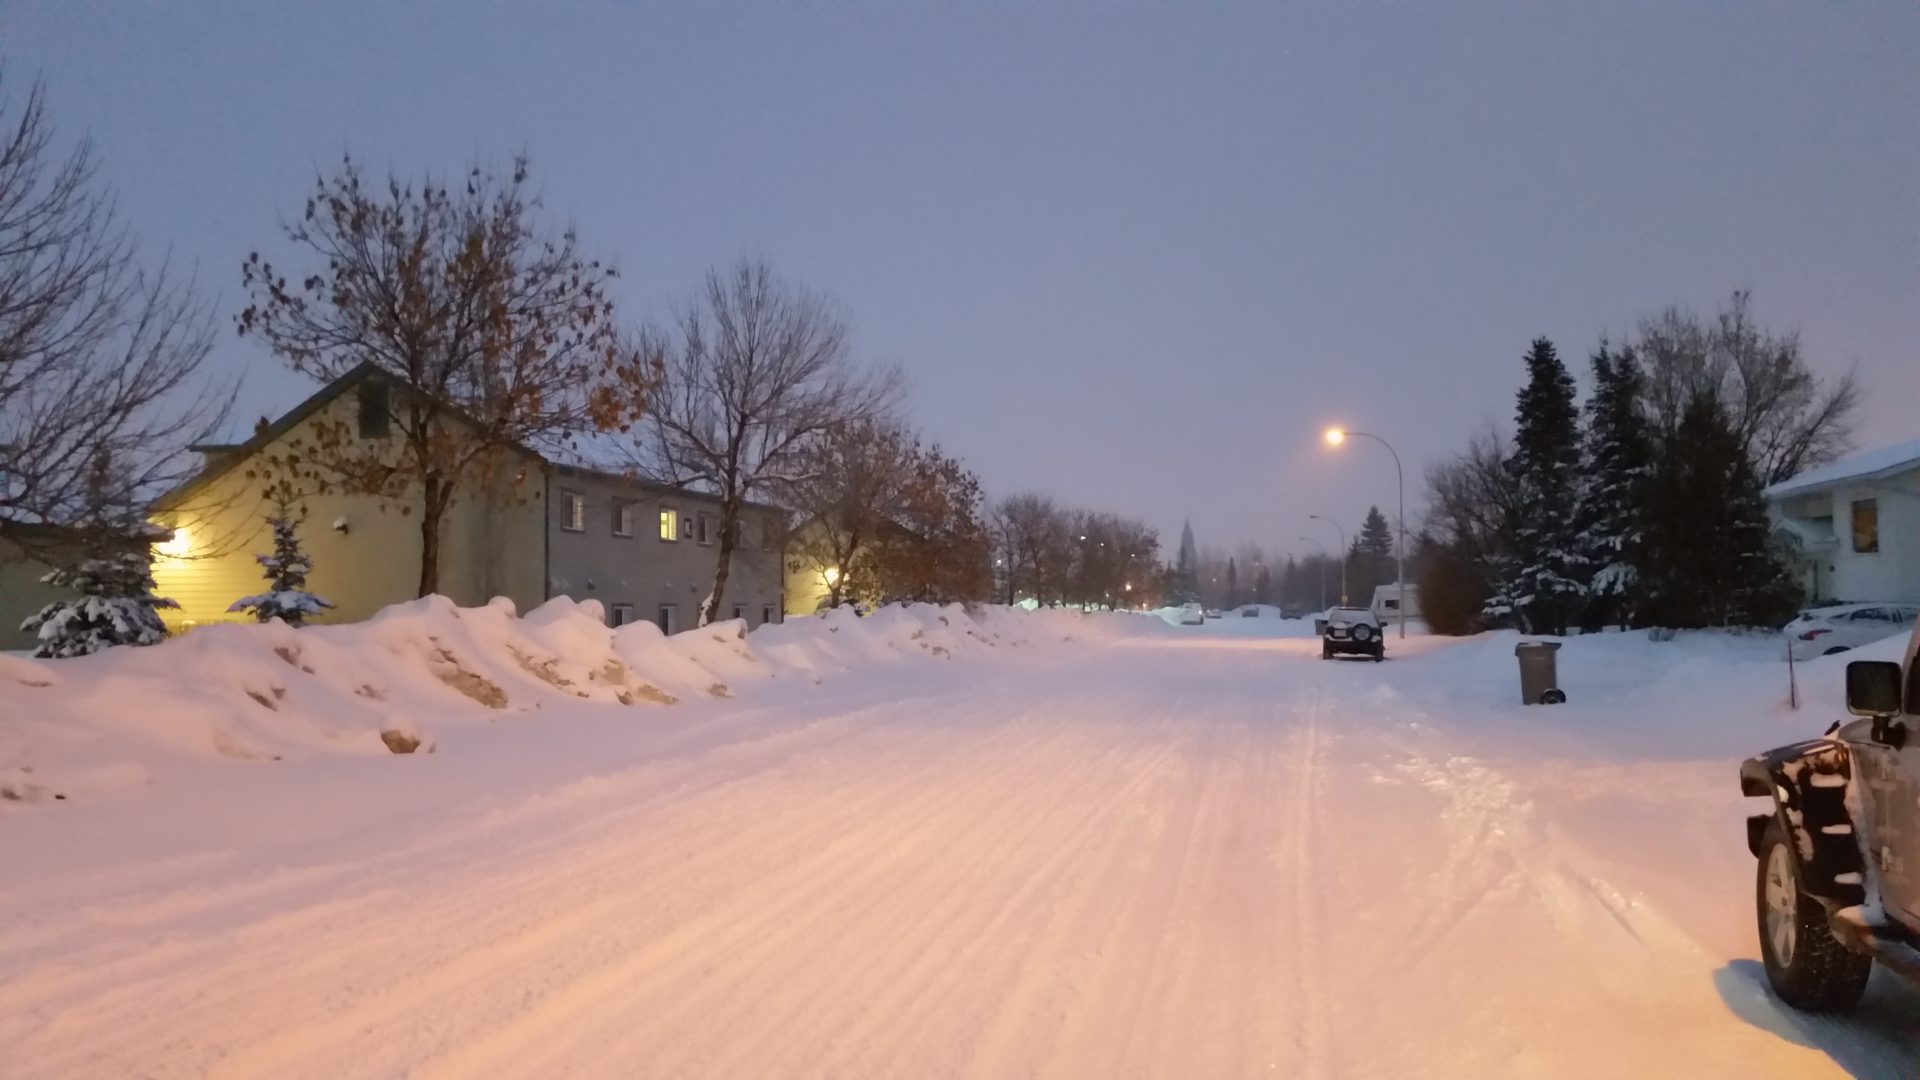 Snow plows hitting central Grande Prairie neighbourhoods today